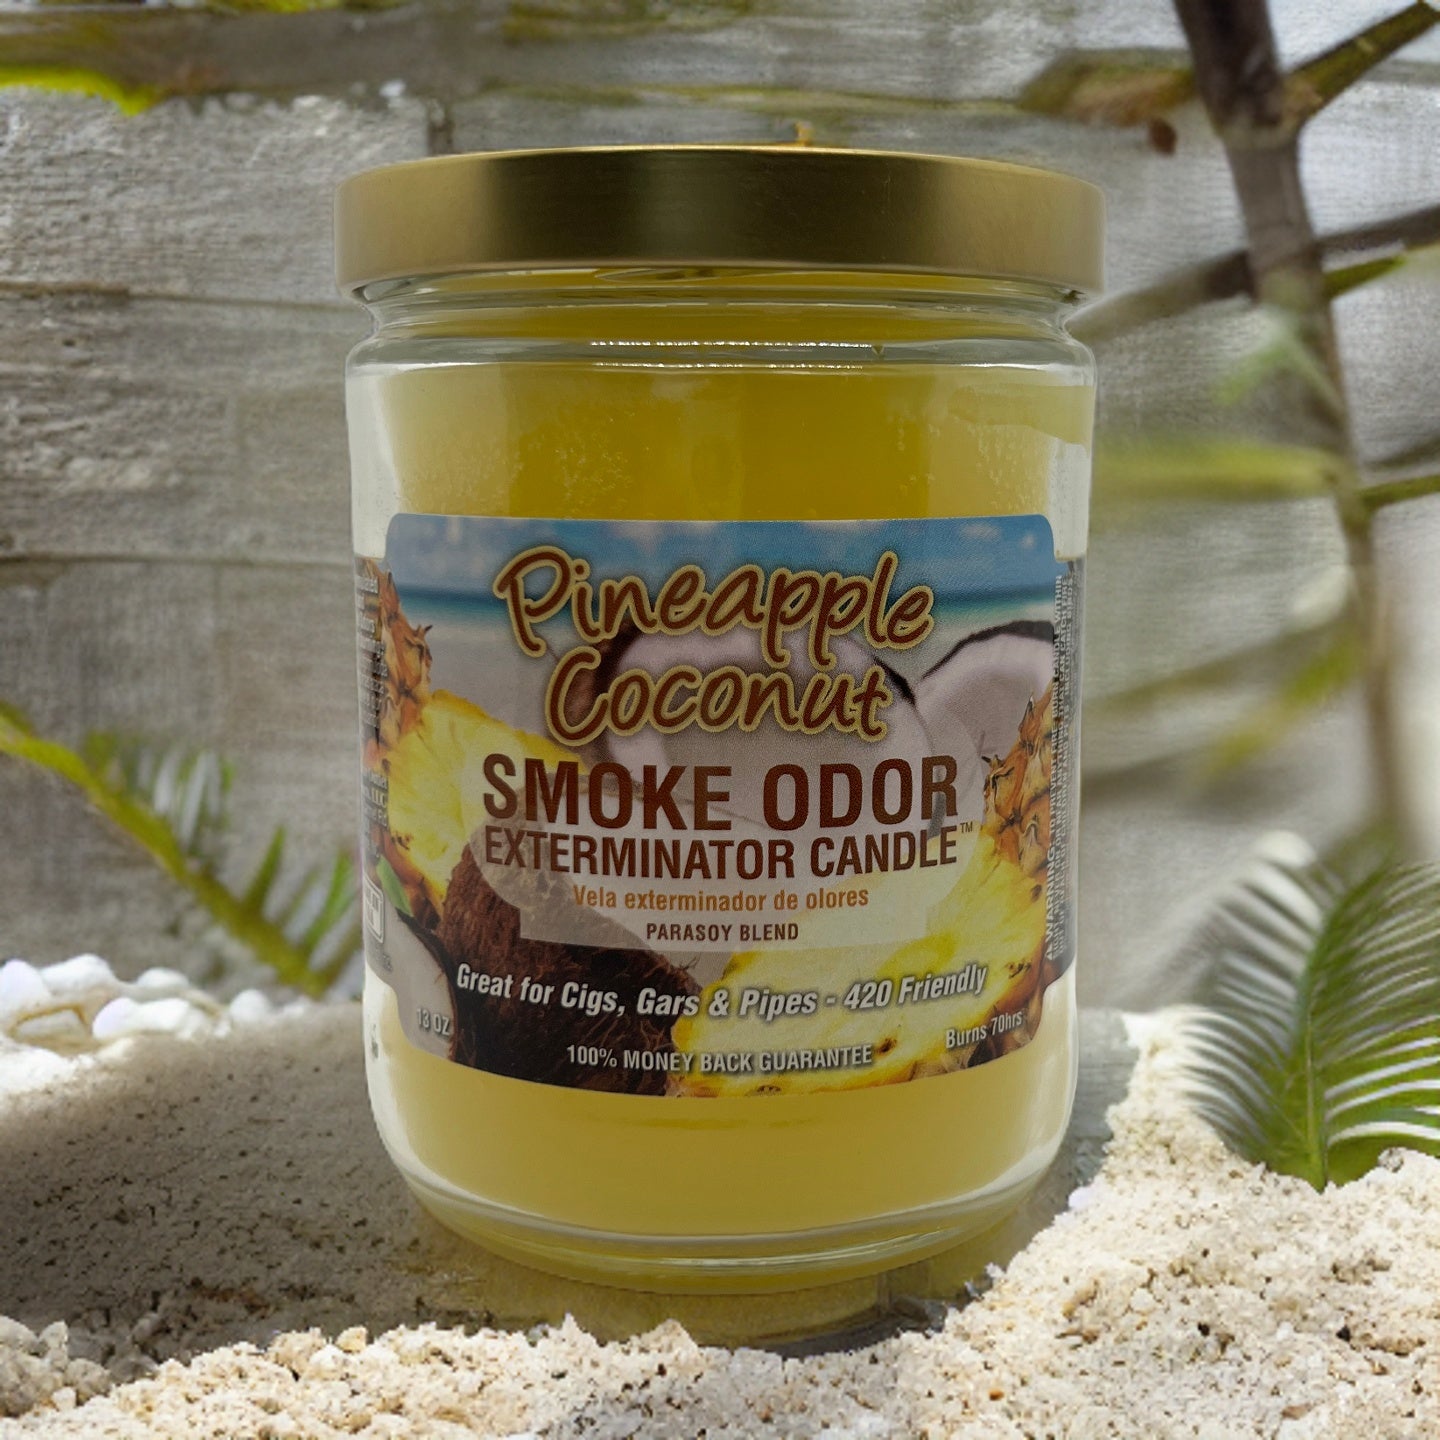 Smoke Exterminator Candle - Pineapple Coconut